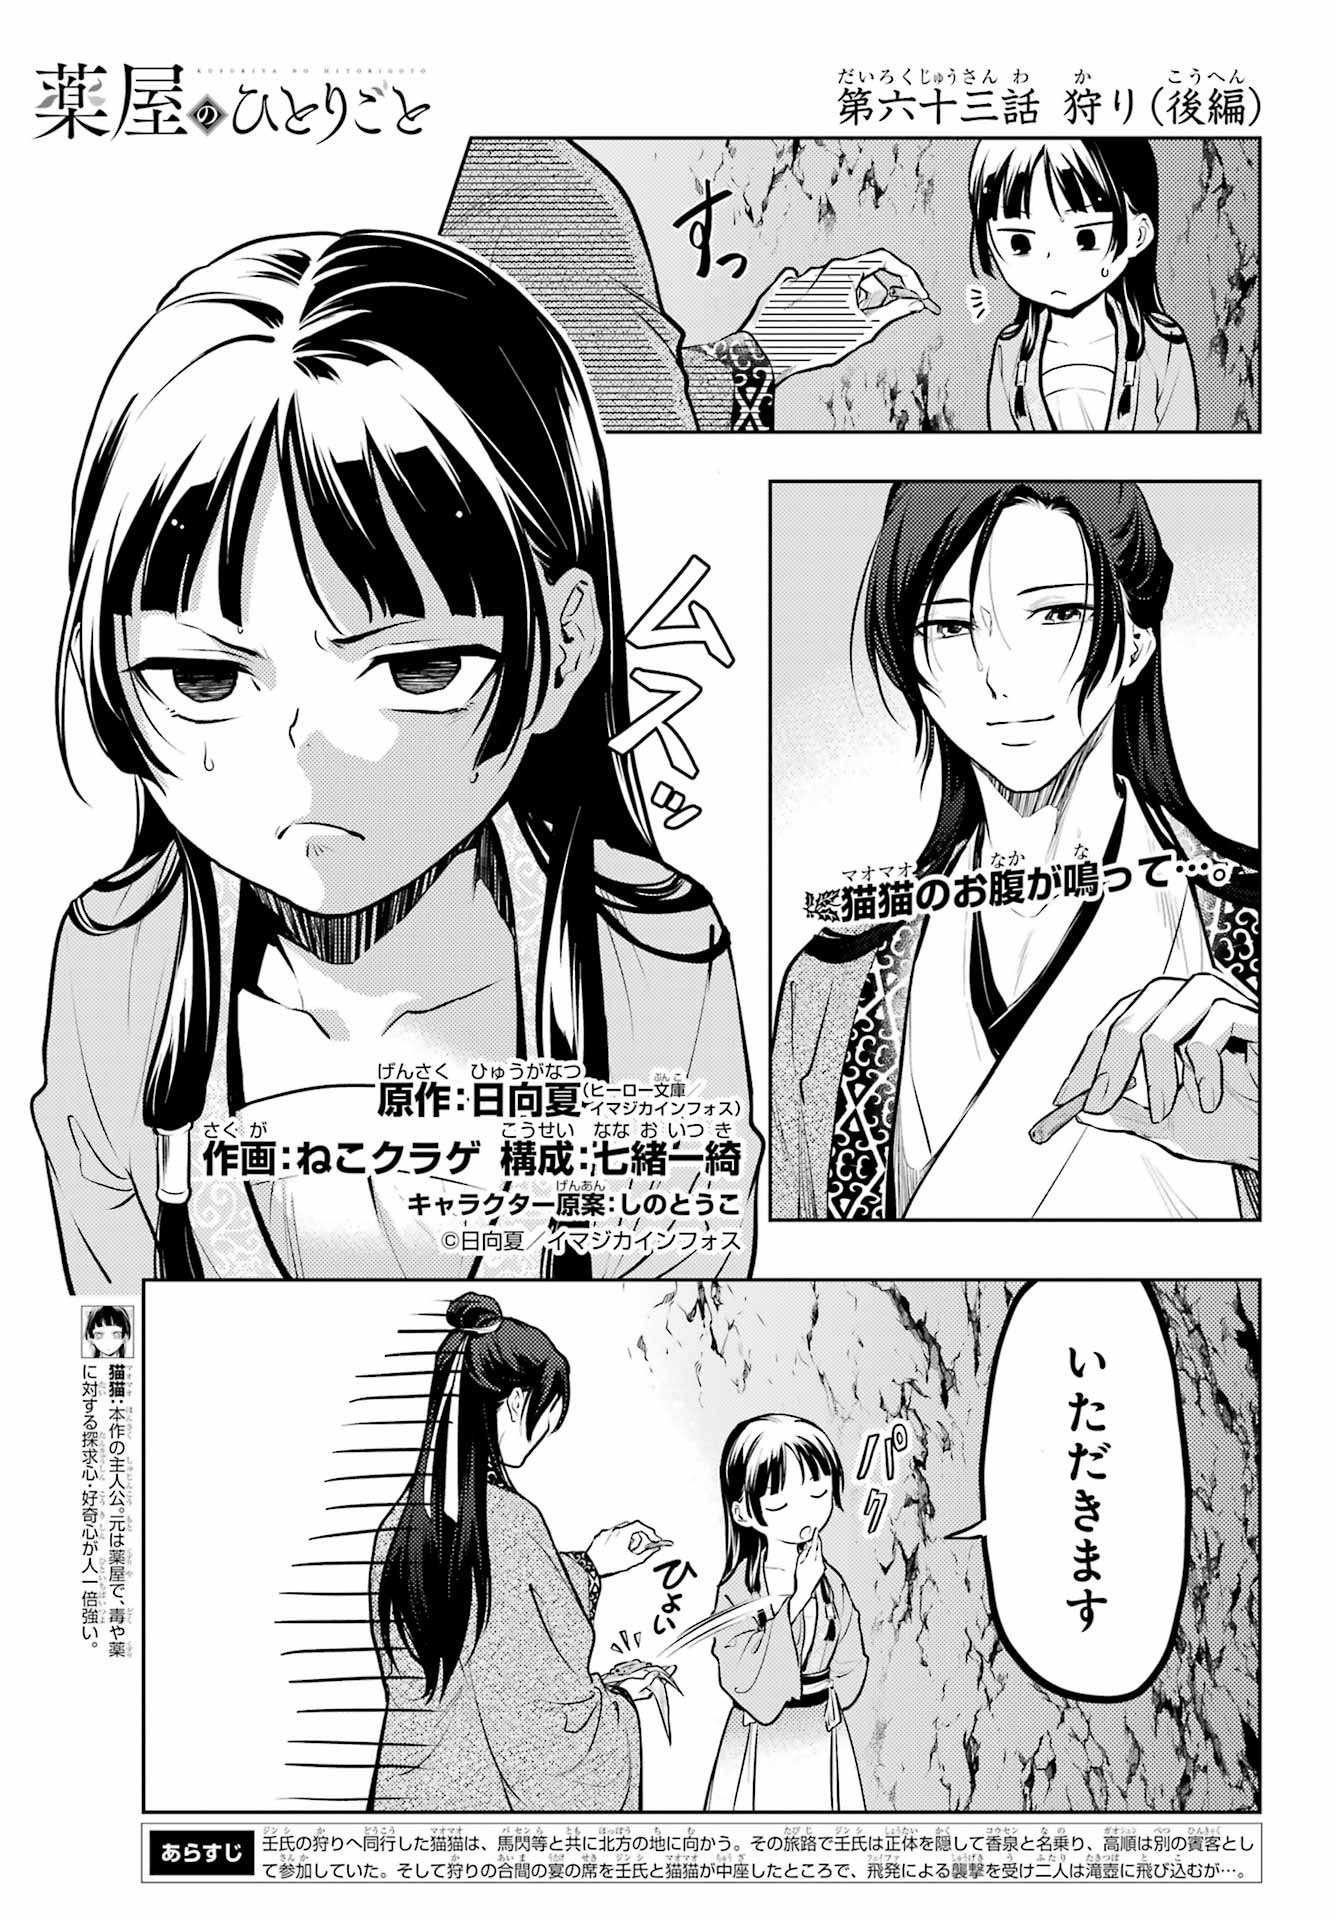 Kusuriya no Hitorigoto - Chapter 63 - Page 1